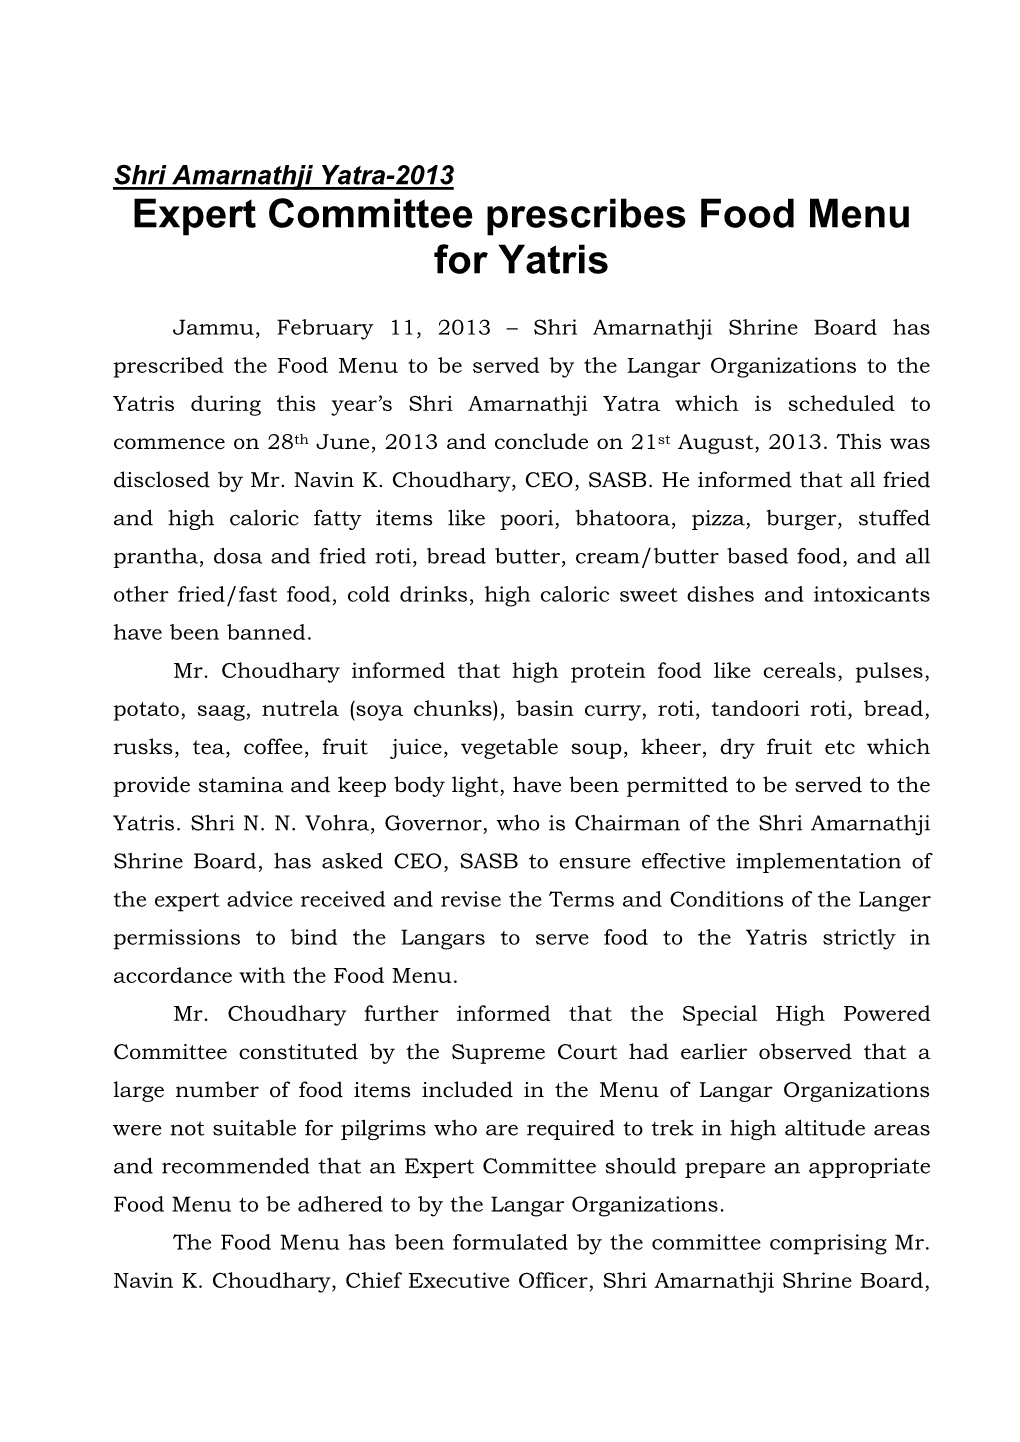 Expert Committee Prescribes Food Menu for Yatris